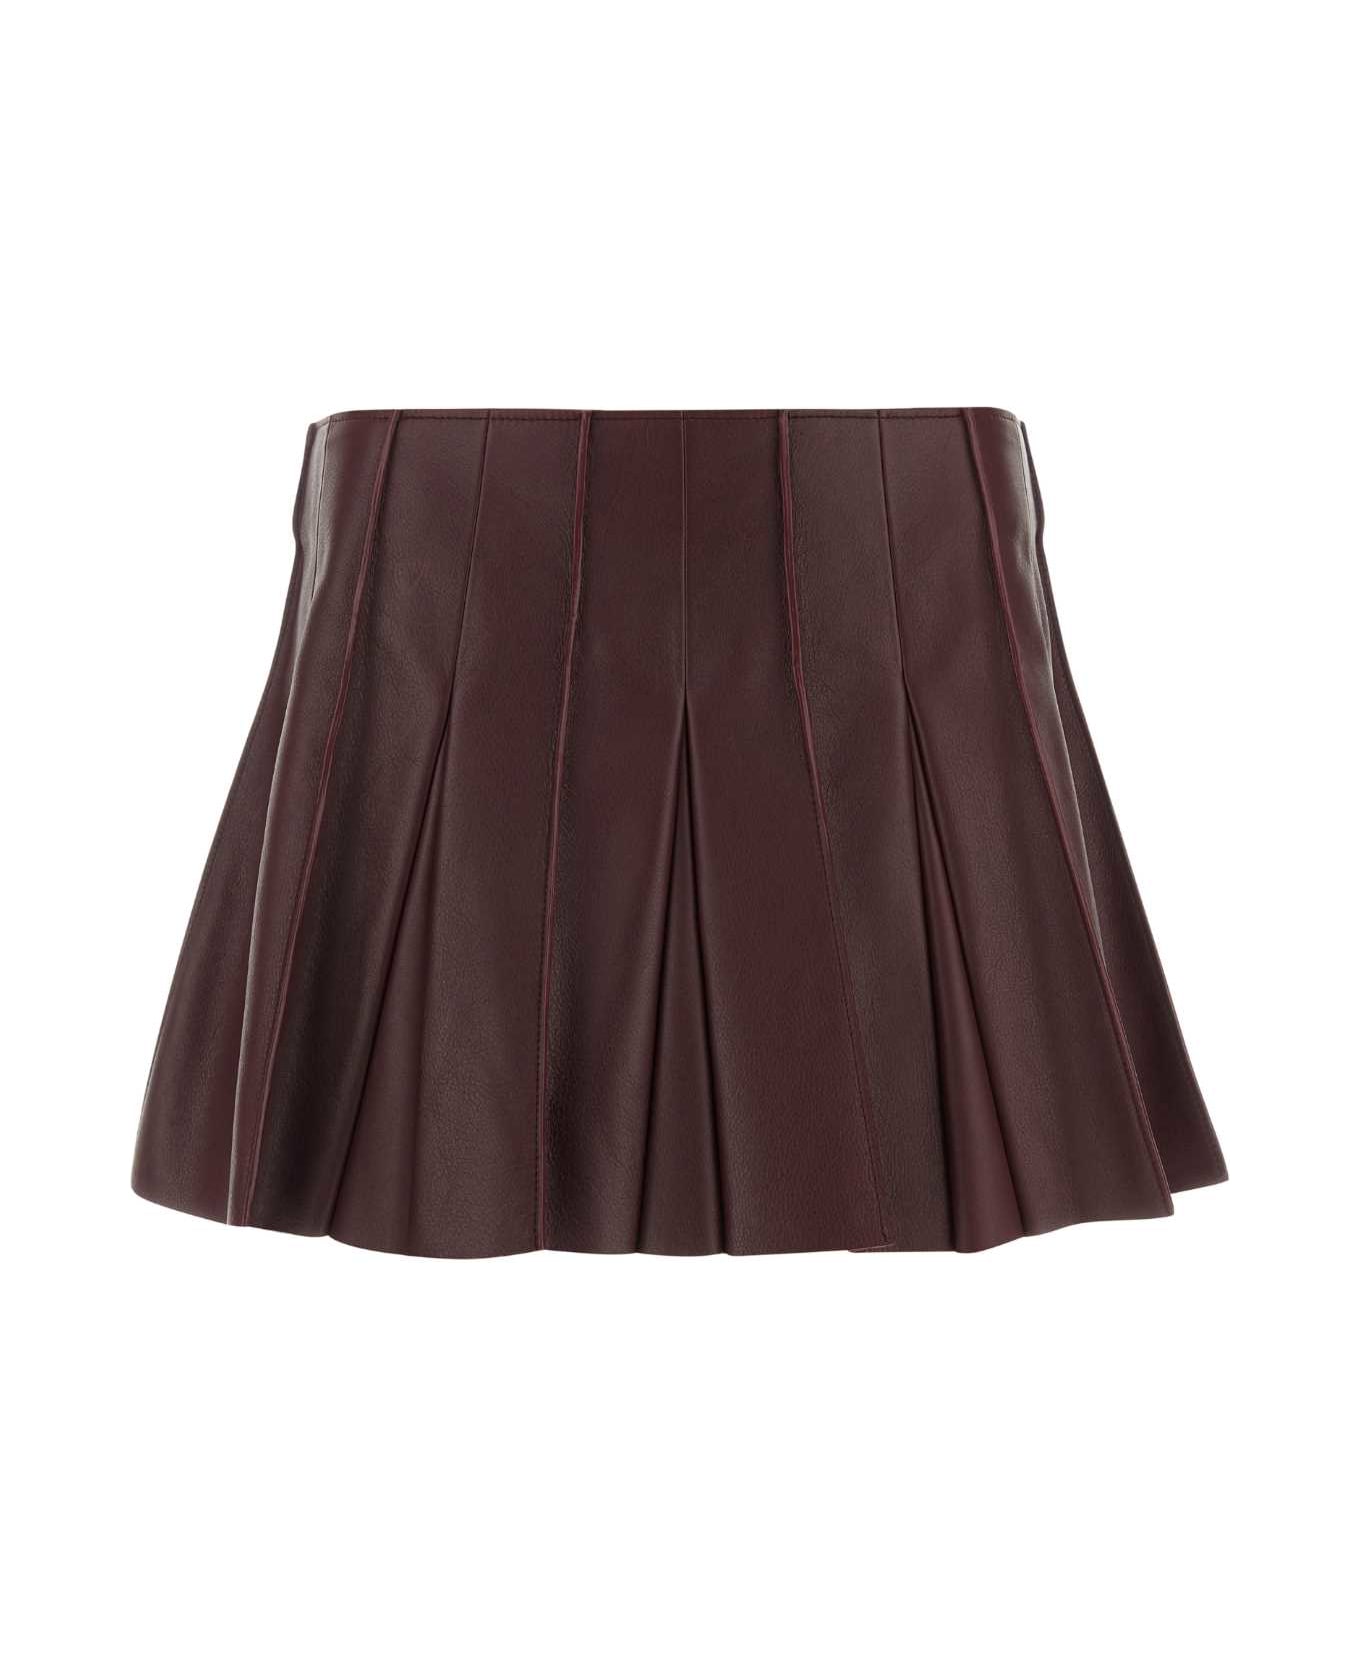 Bottega Veneta Leather Mini Skirt - MERLOT